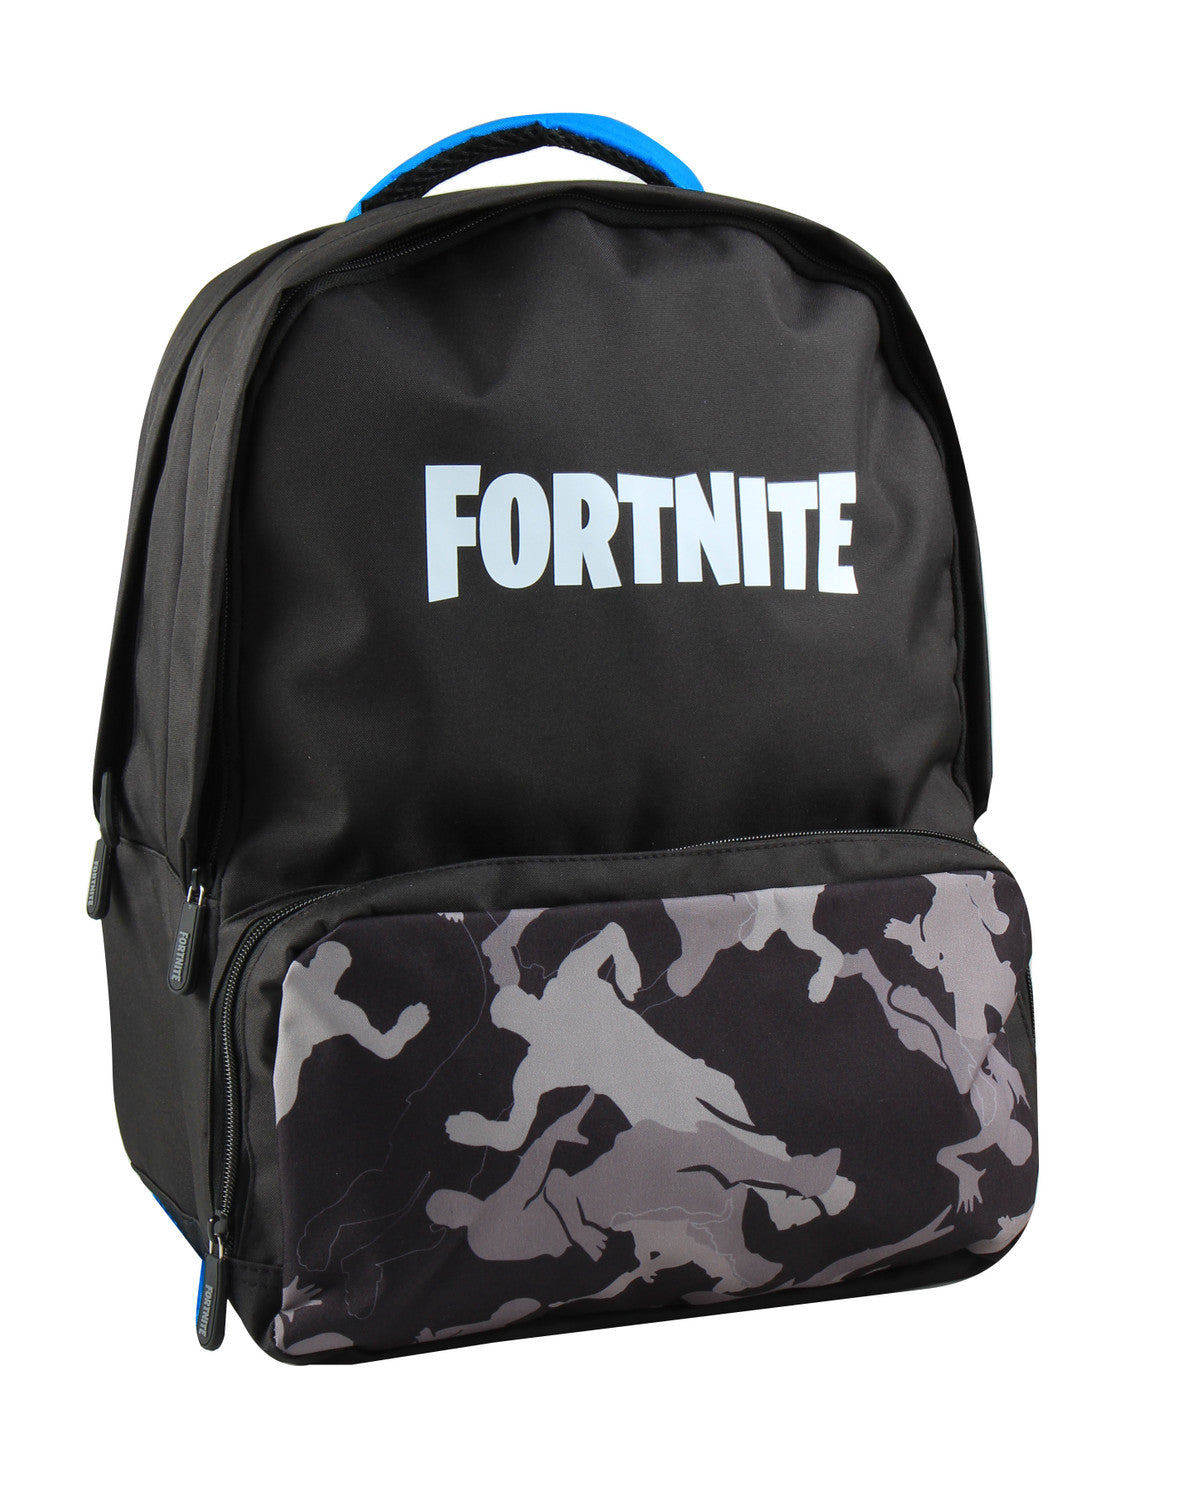 Fortnite - Backpack "Fortnite" - Rucksack